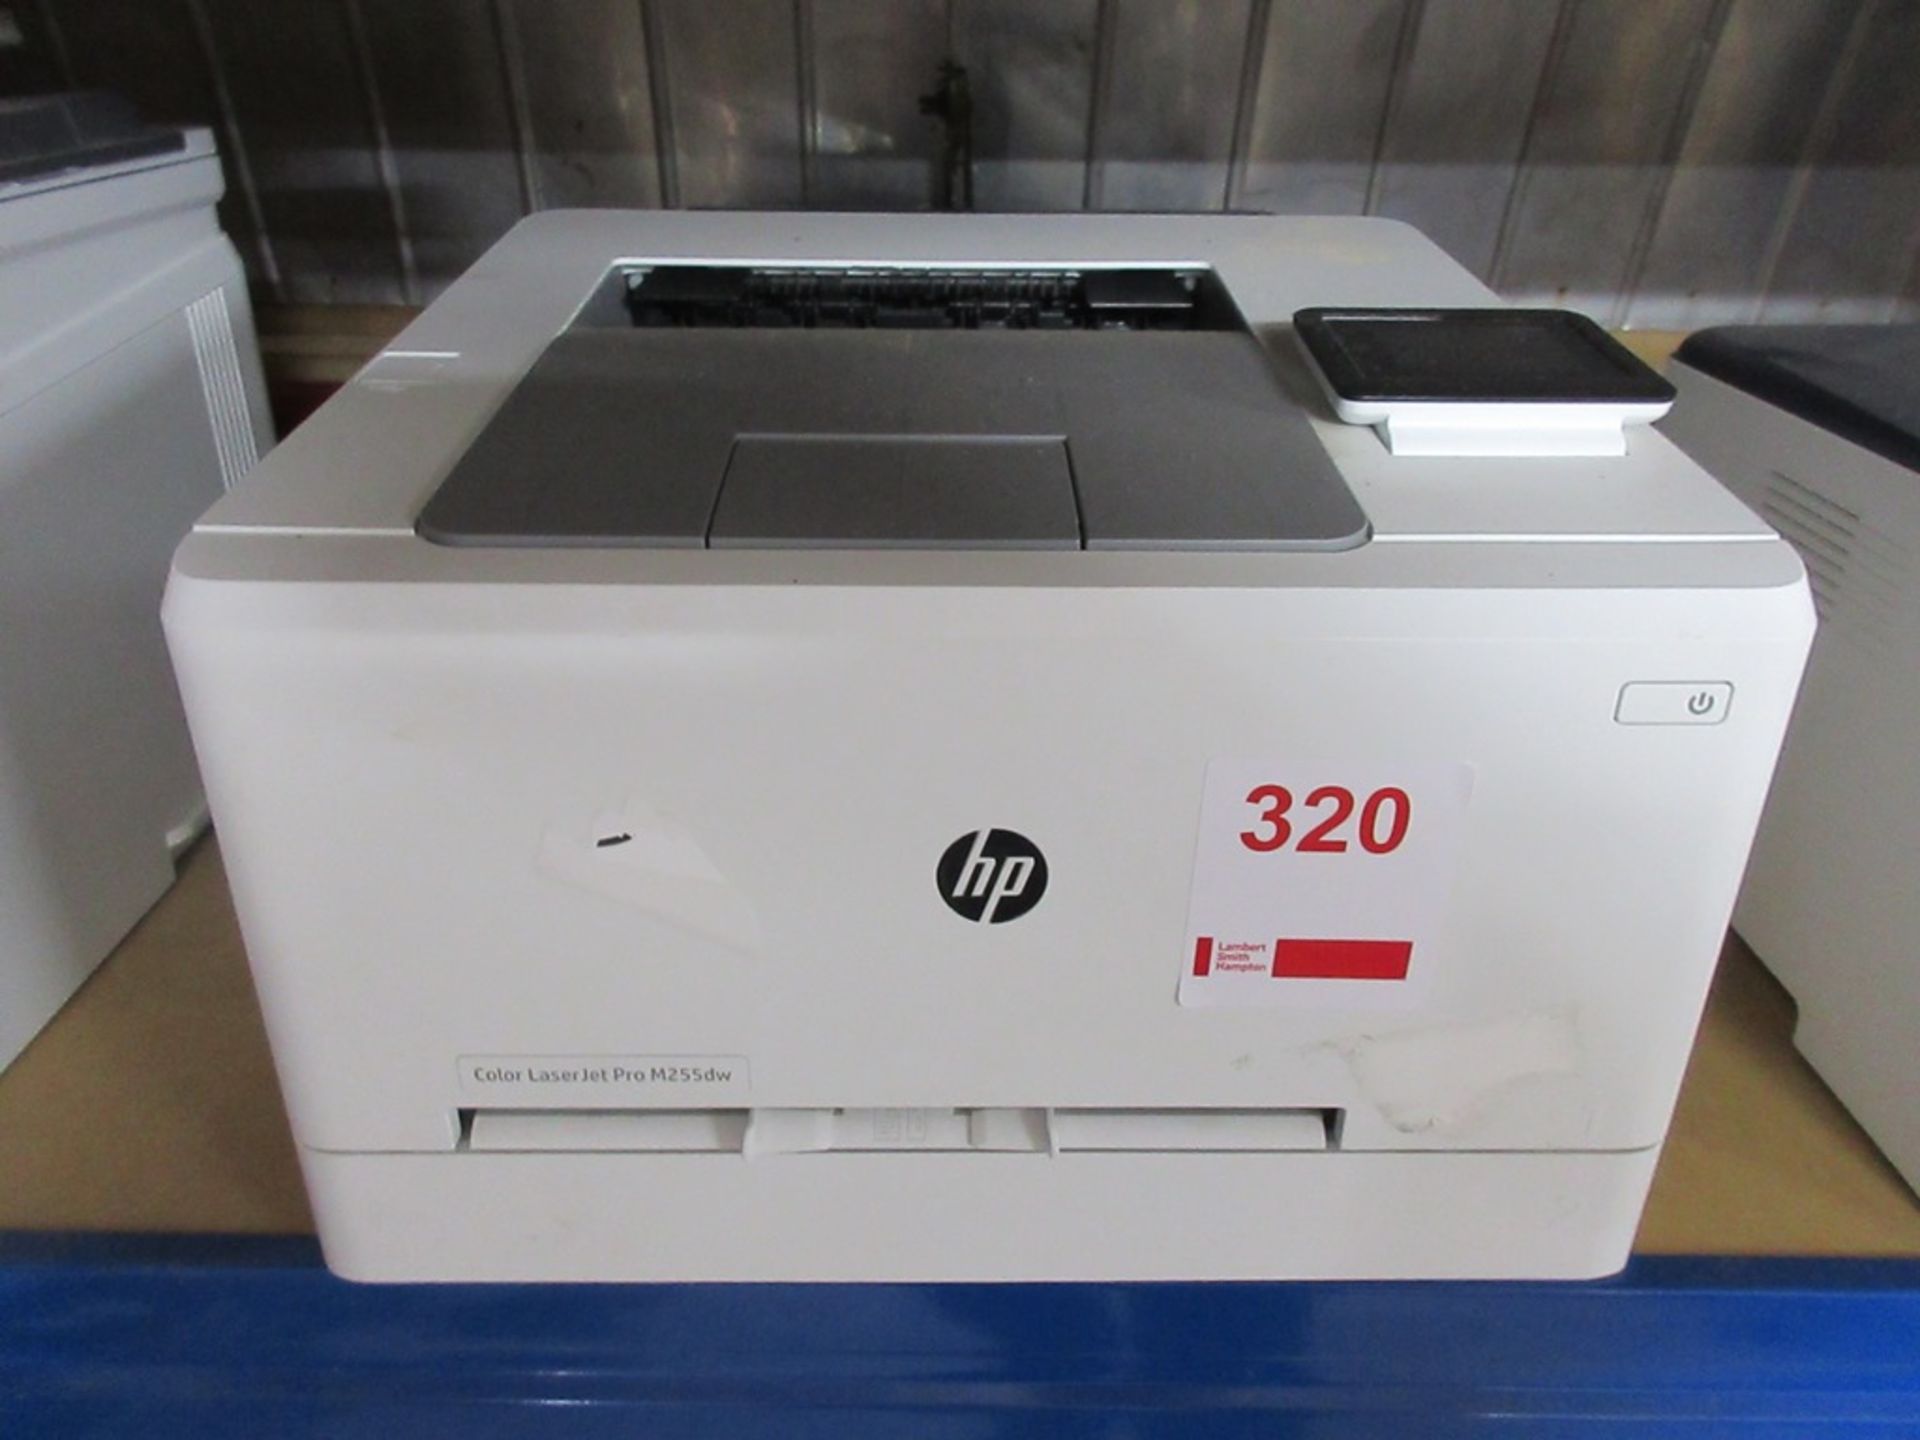 HP Color Laserjet Pro M255dw printer